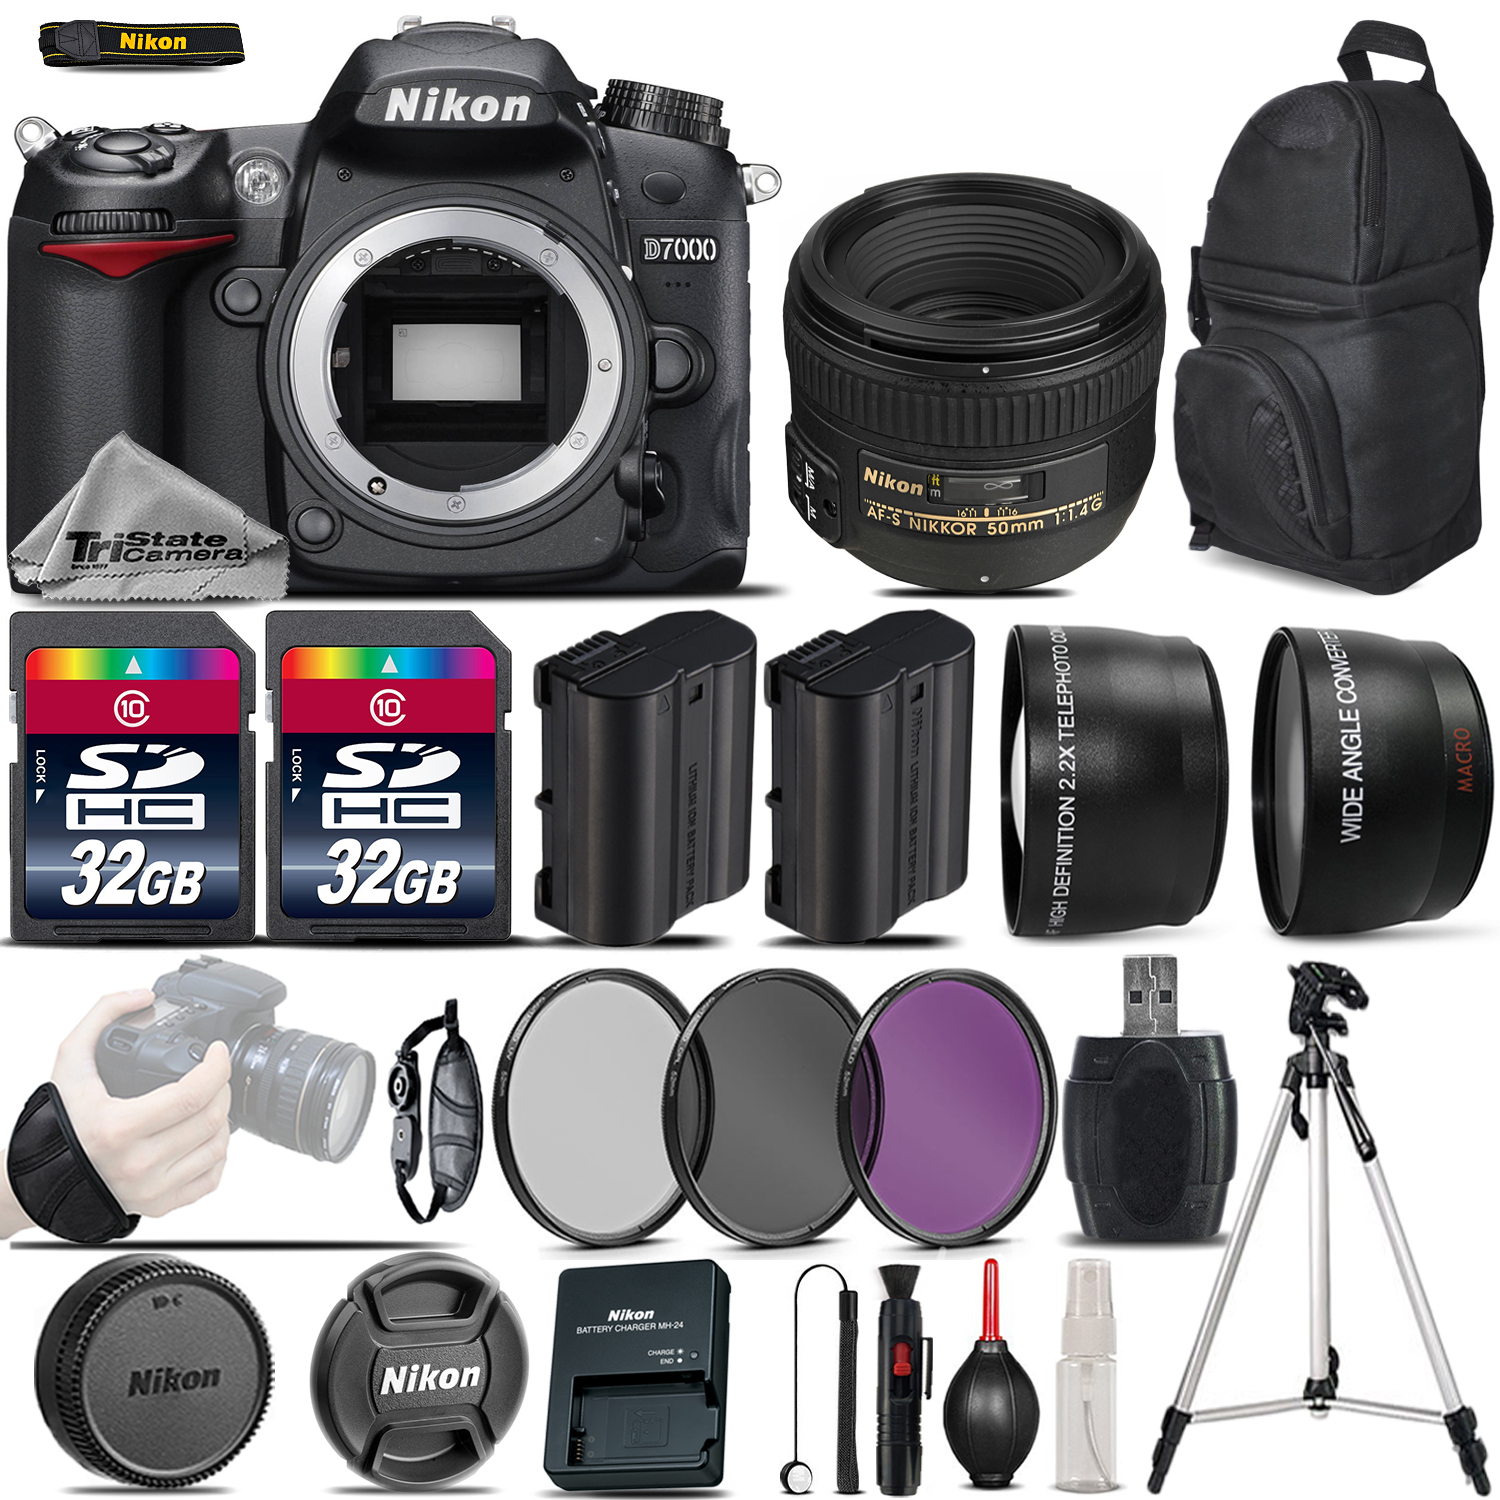 D7000 Digital SLR Camera + 50mm 1.4G Lens + 64GB -Great Saving Full Kit *FREE SHIPPING*